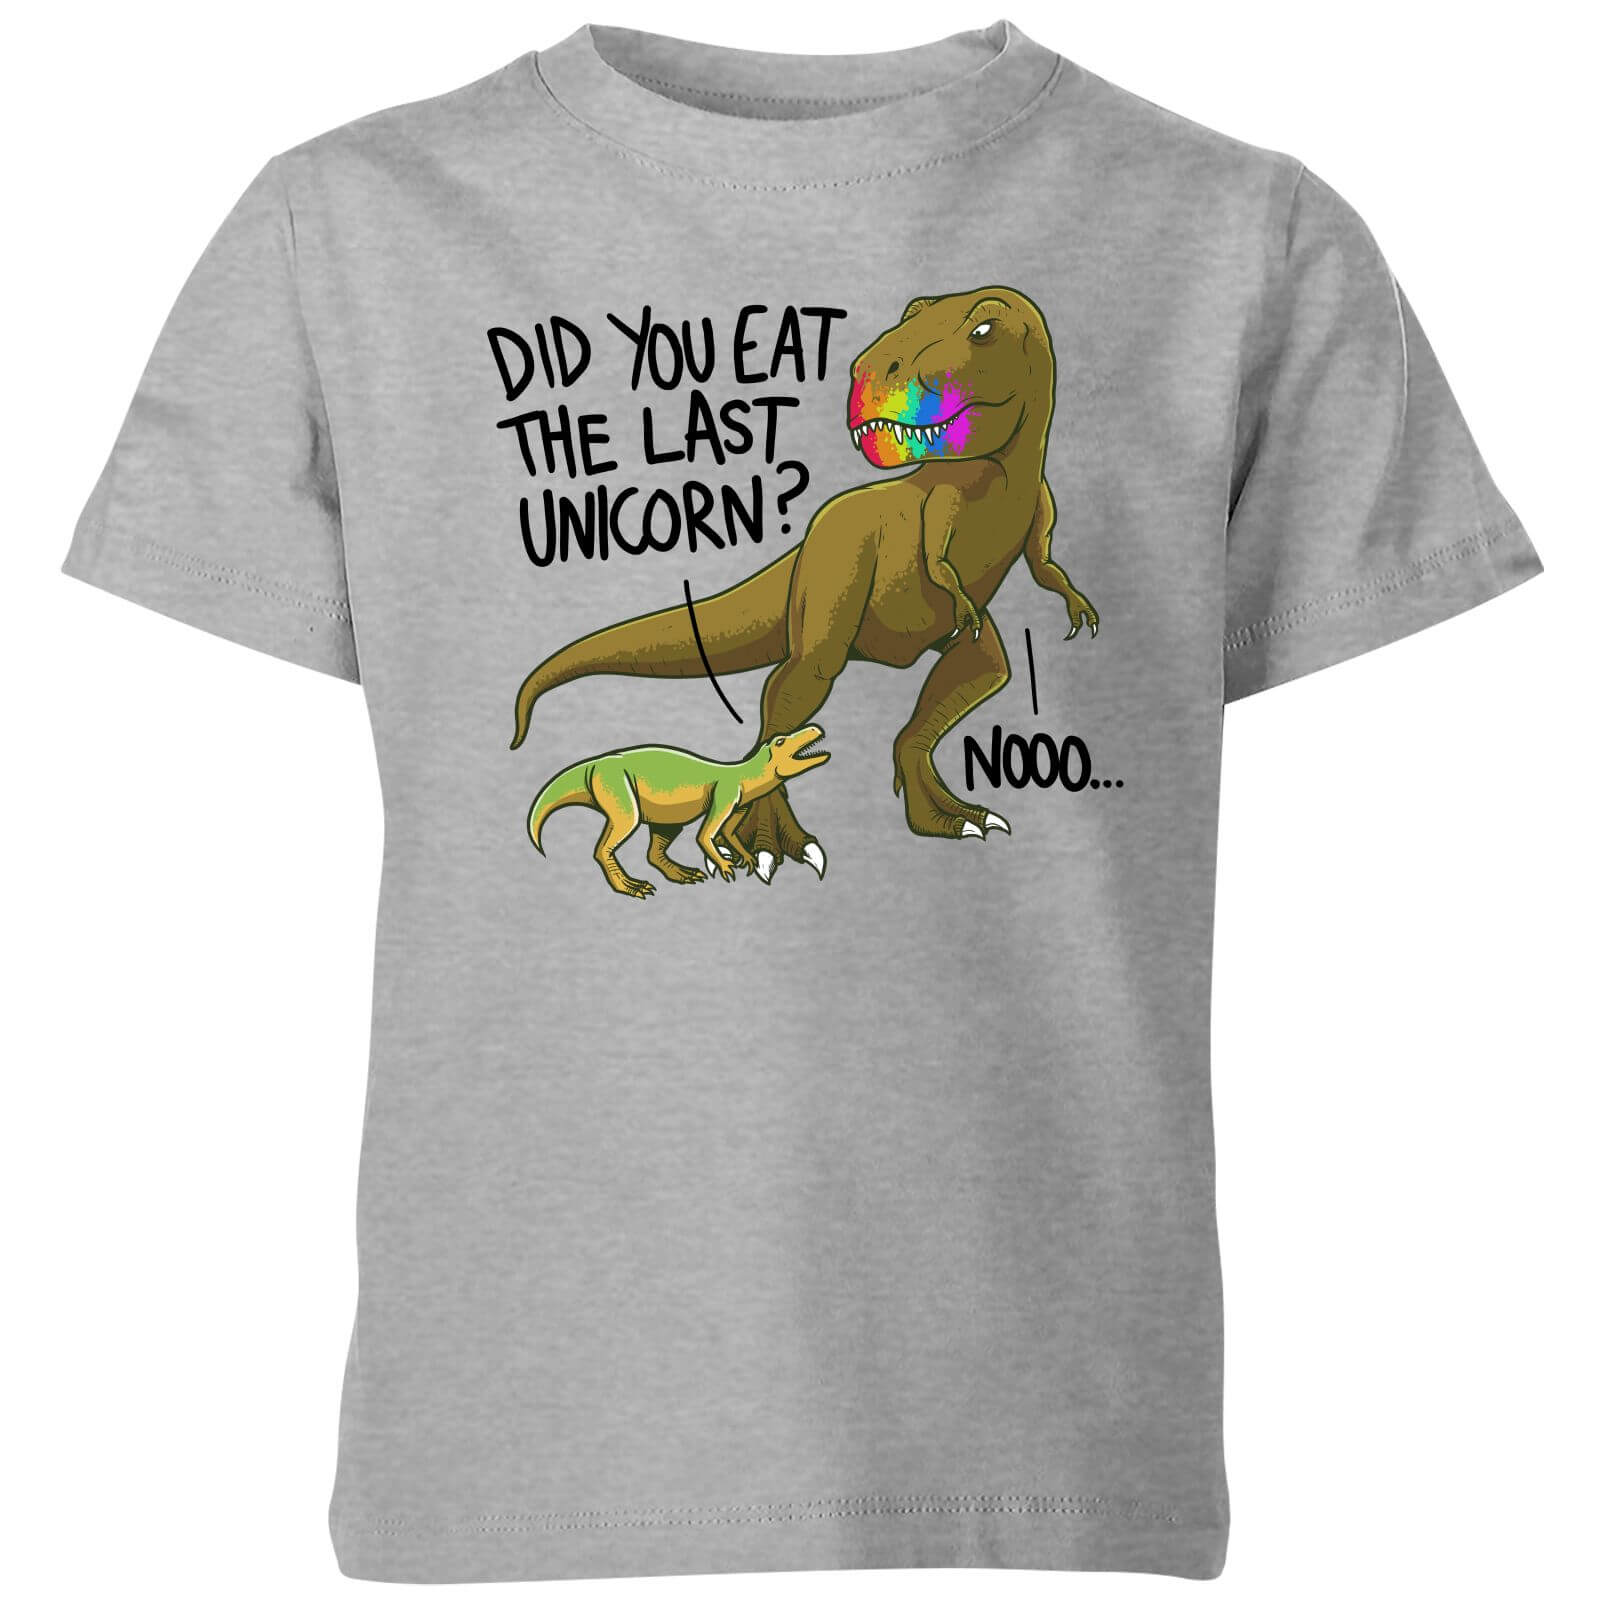 Did You Eat The Last Unicorn? Kids' T-Shirt - Grey - 3-4 Years